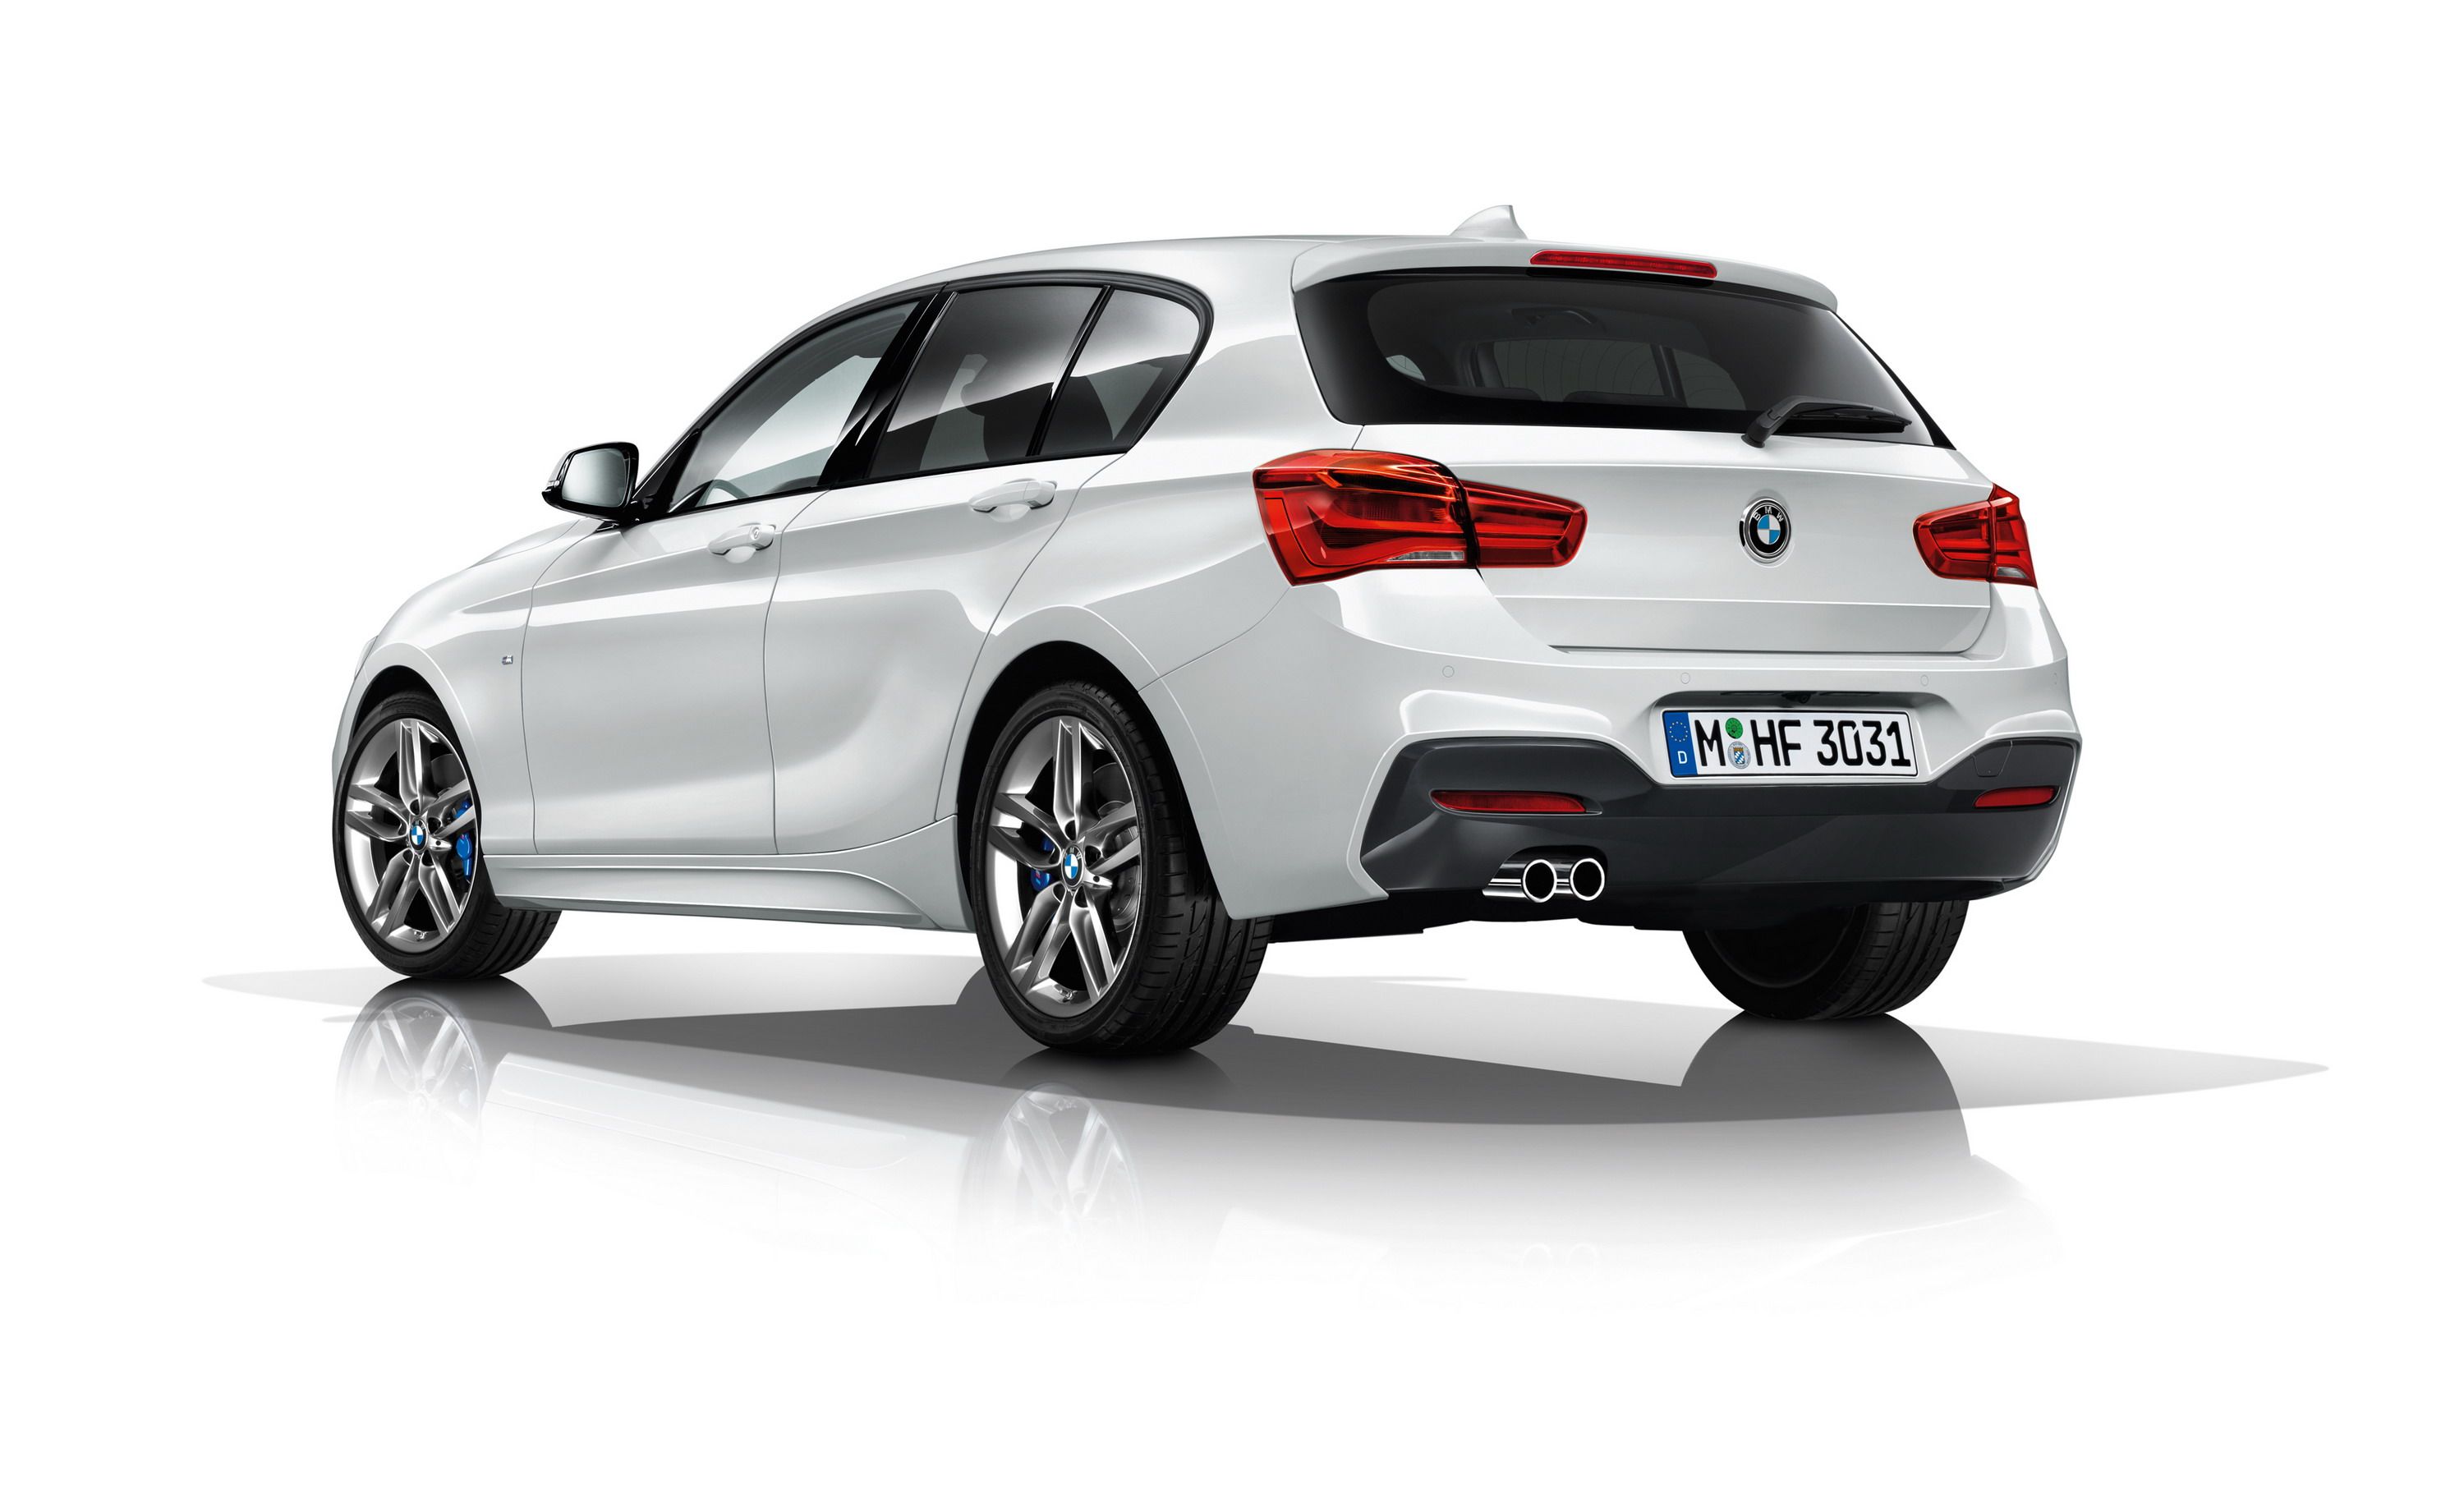 2016 - 2018 BMW 1 Series